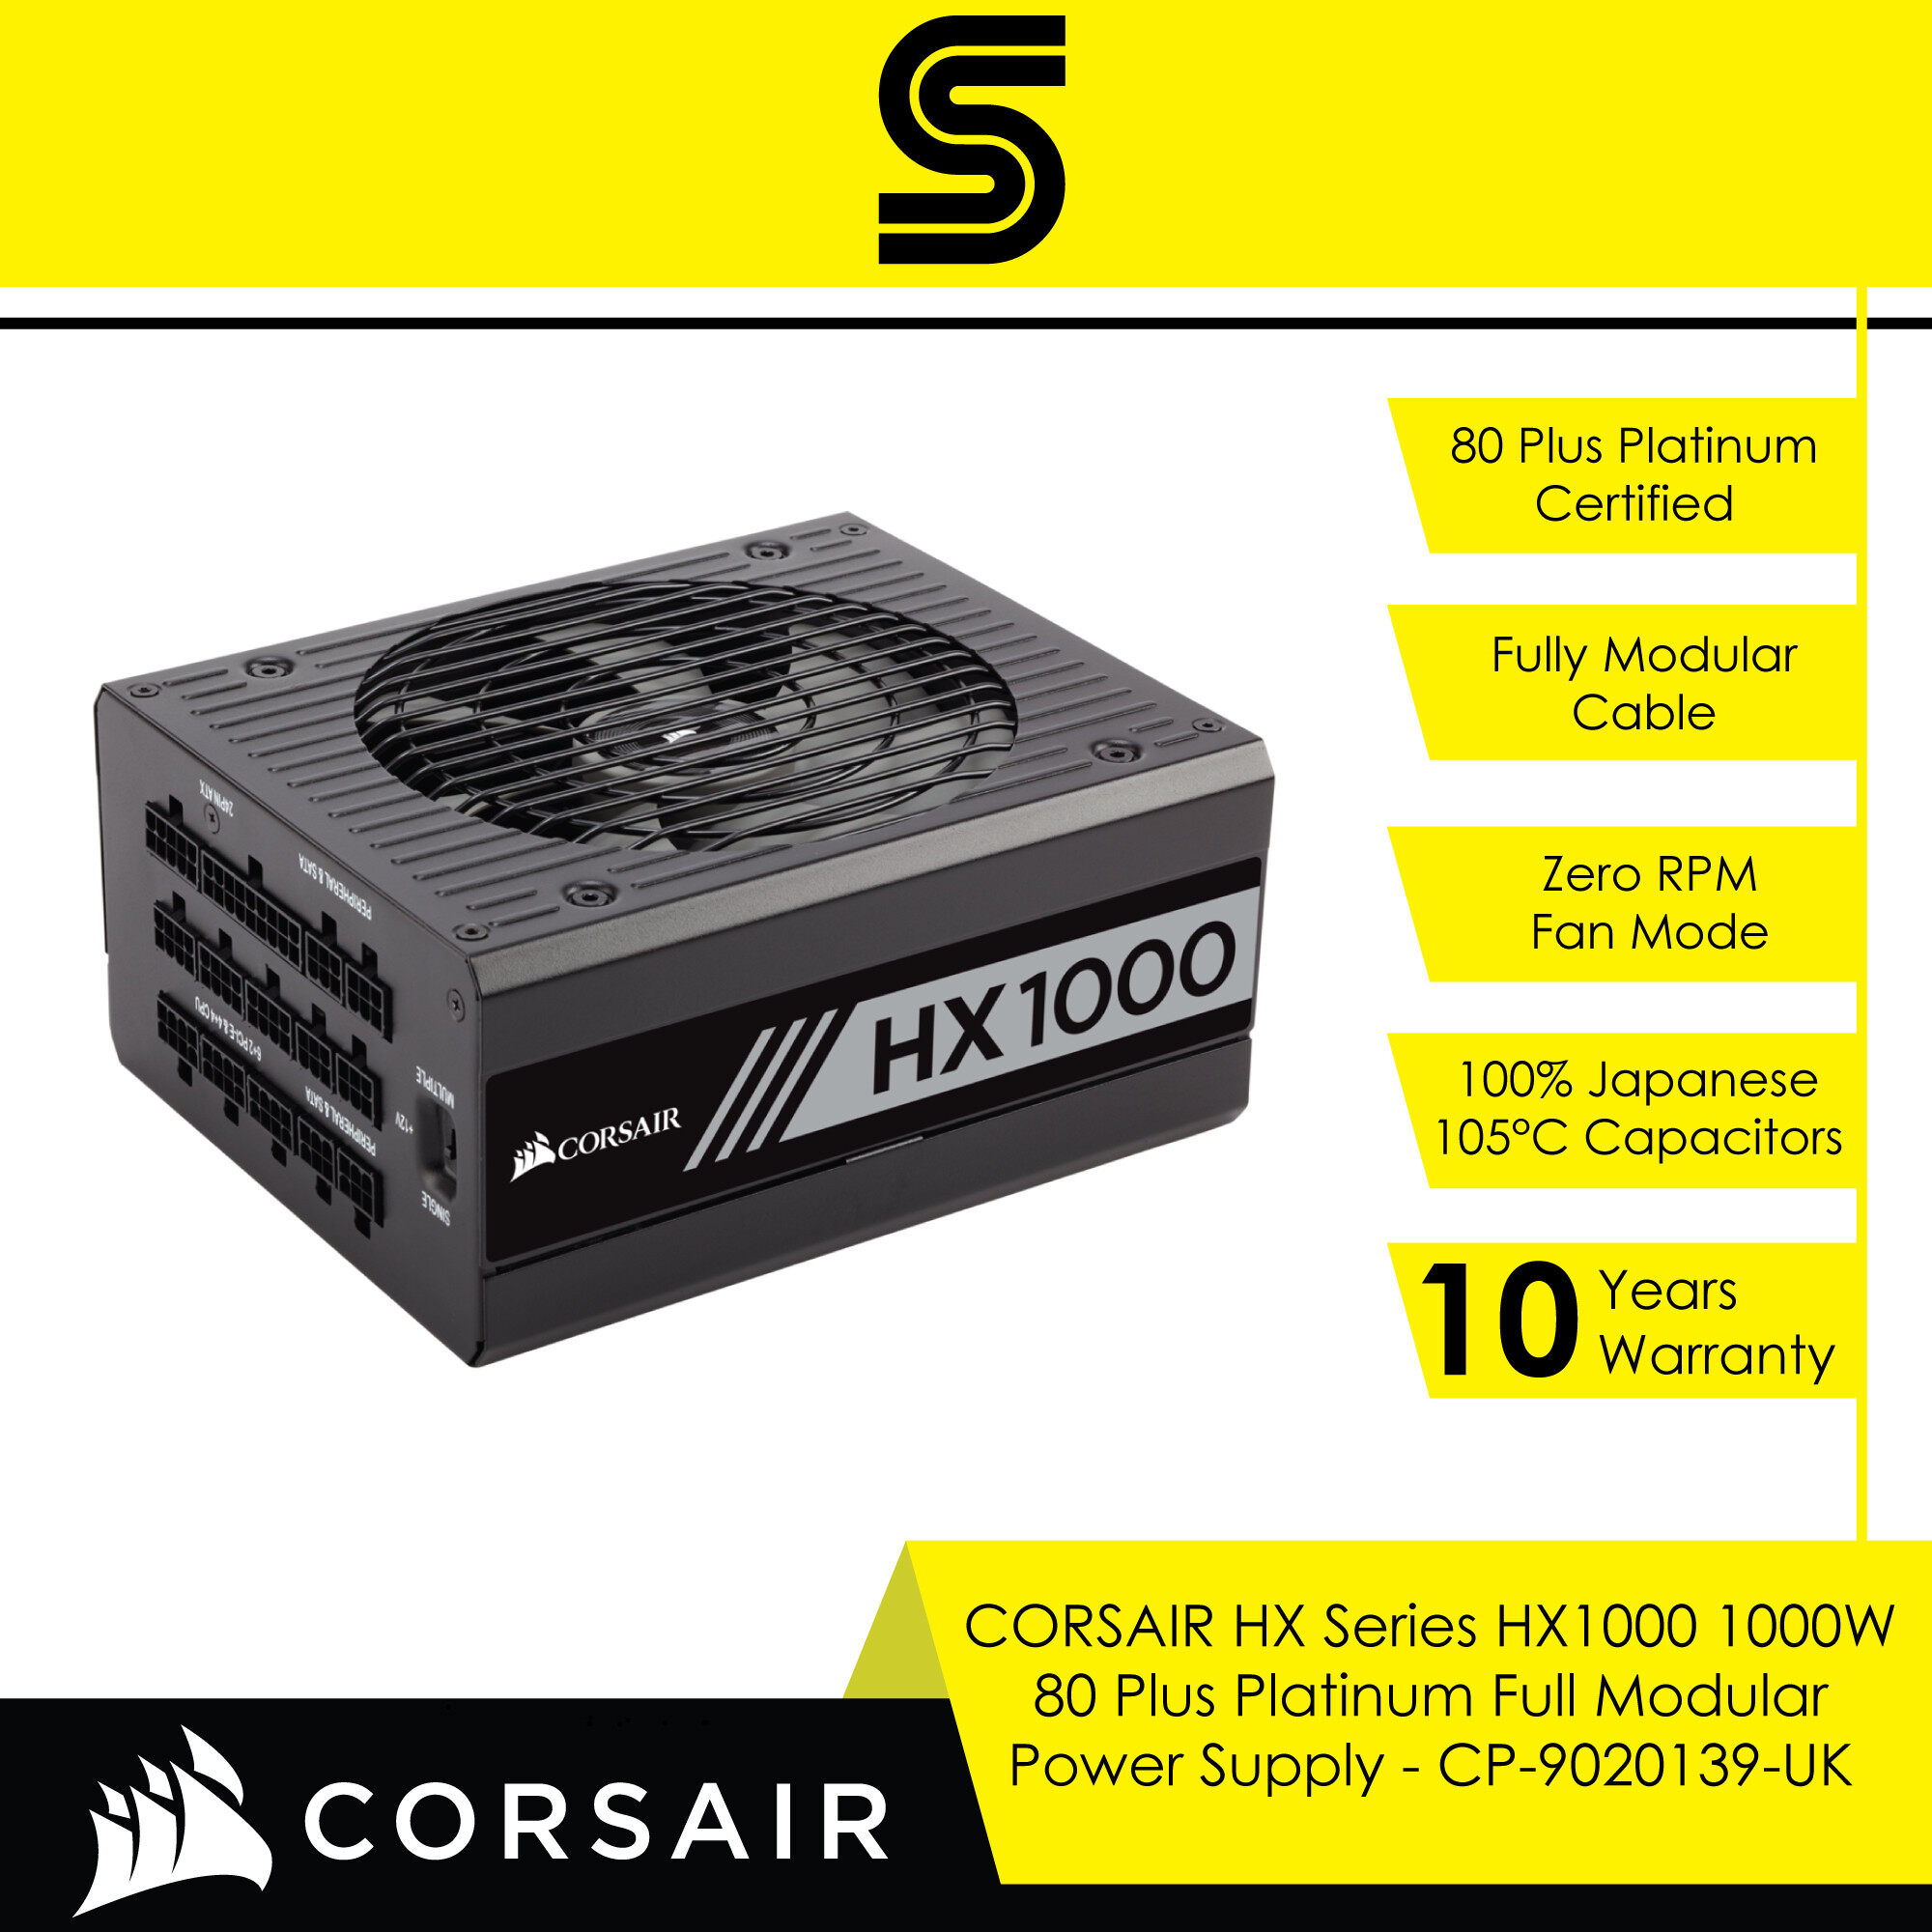 CORSAIR HX1000 1000W 80 Plus Platinum Full Modular Power Supply - CP-9020139-UK